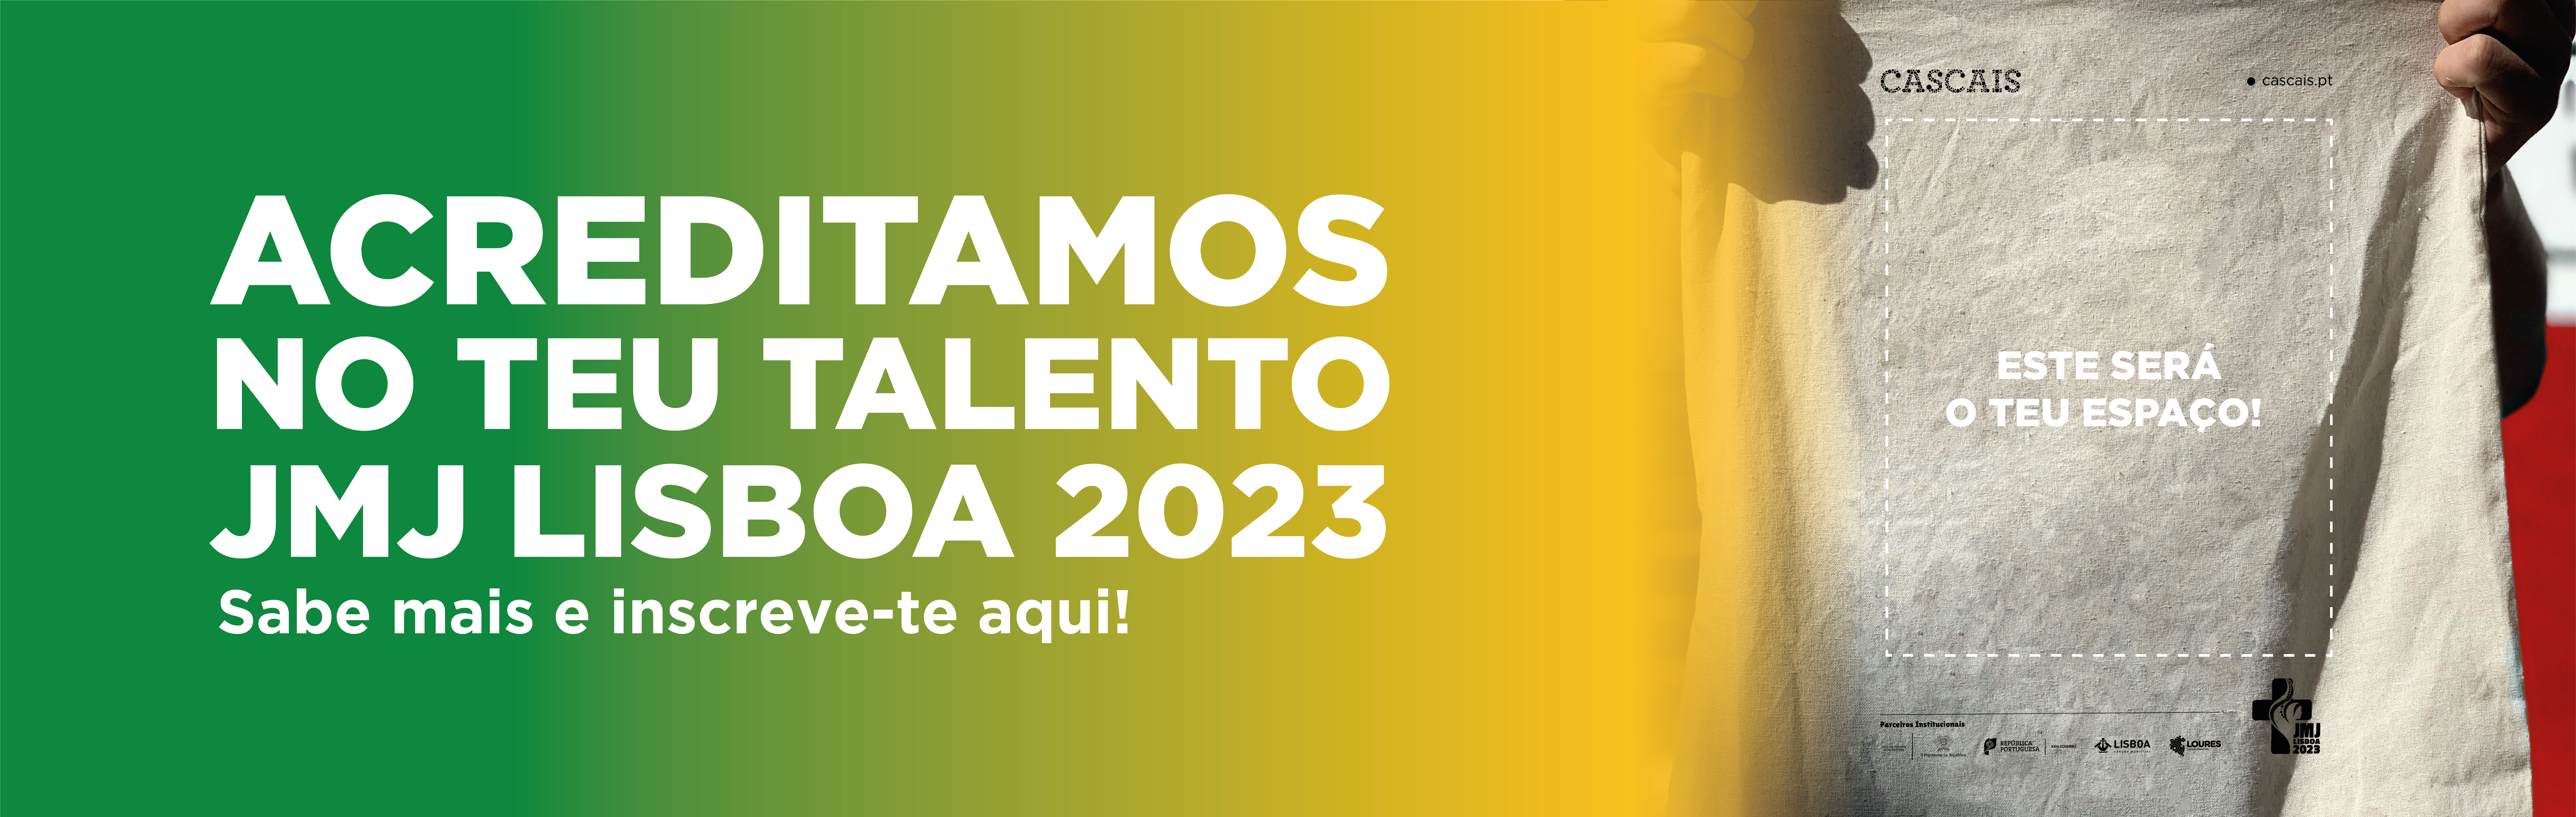 Acreditamos no teu talento - JMJ Lisboa 2023